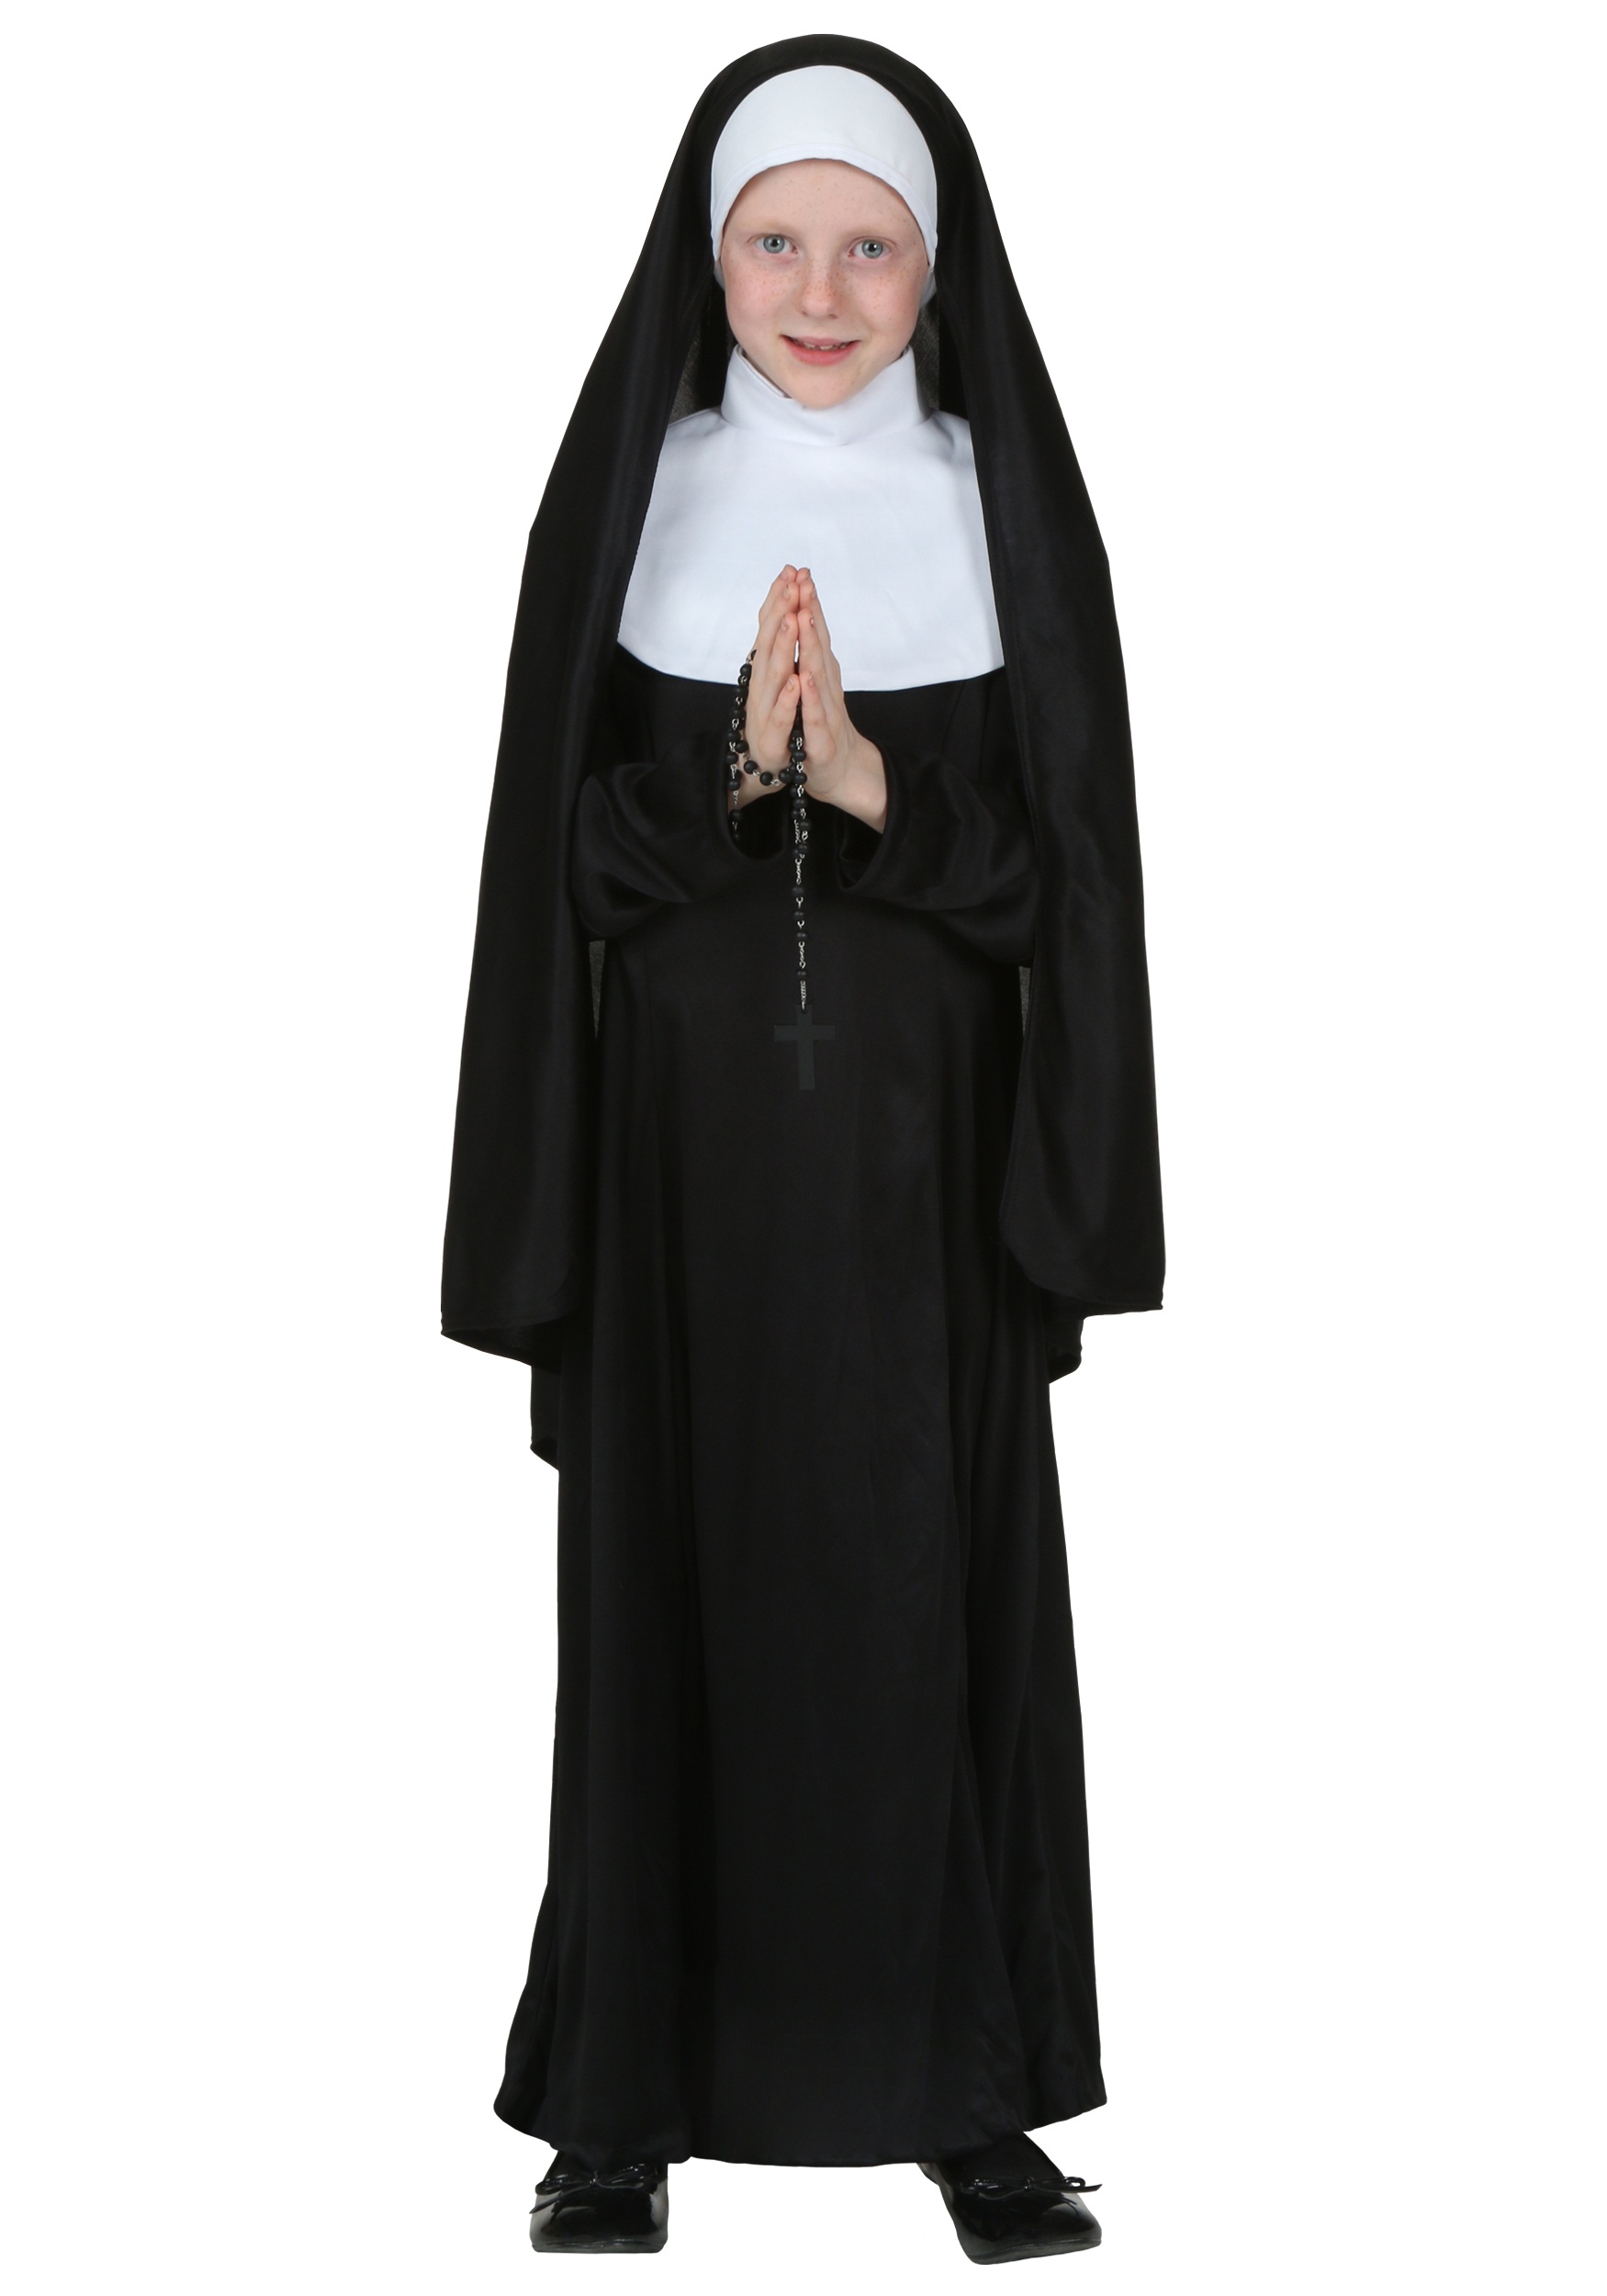 Photos - Fancy Dress FUN Costumes Nun Costume for Girls Black/White FUN2921CH